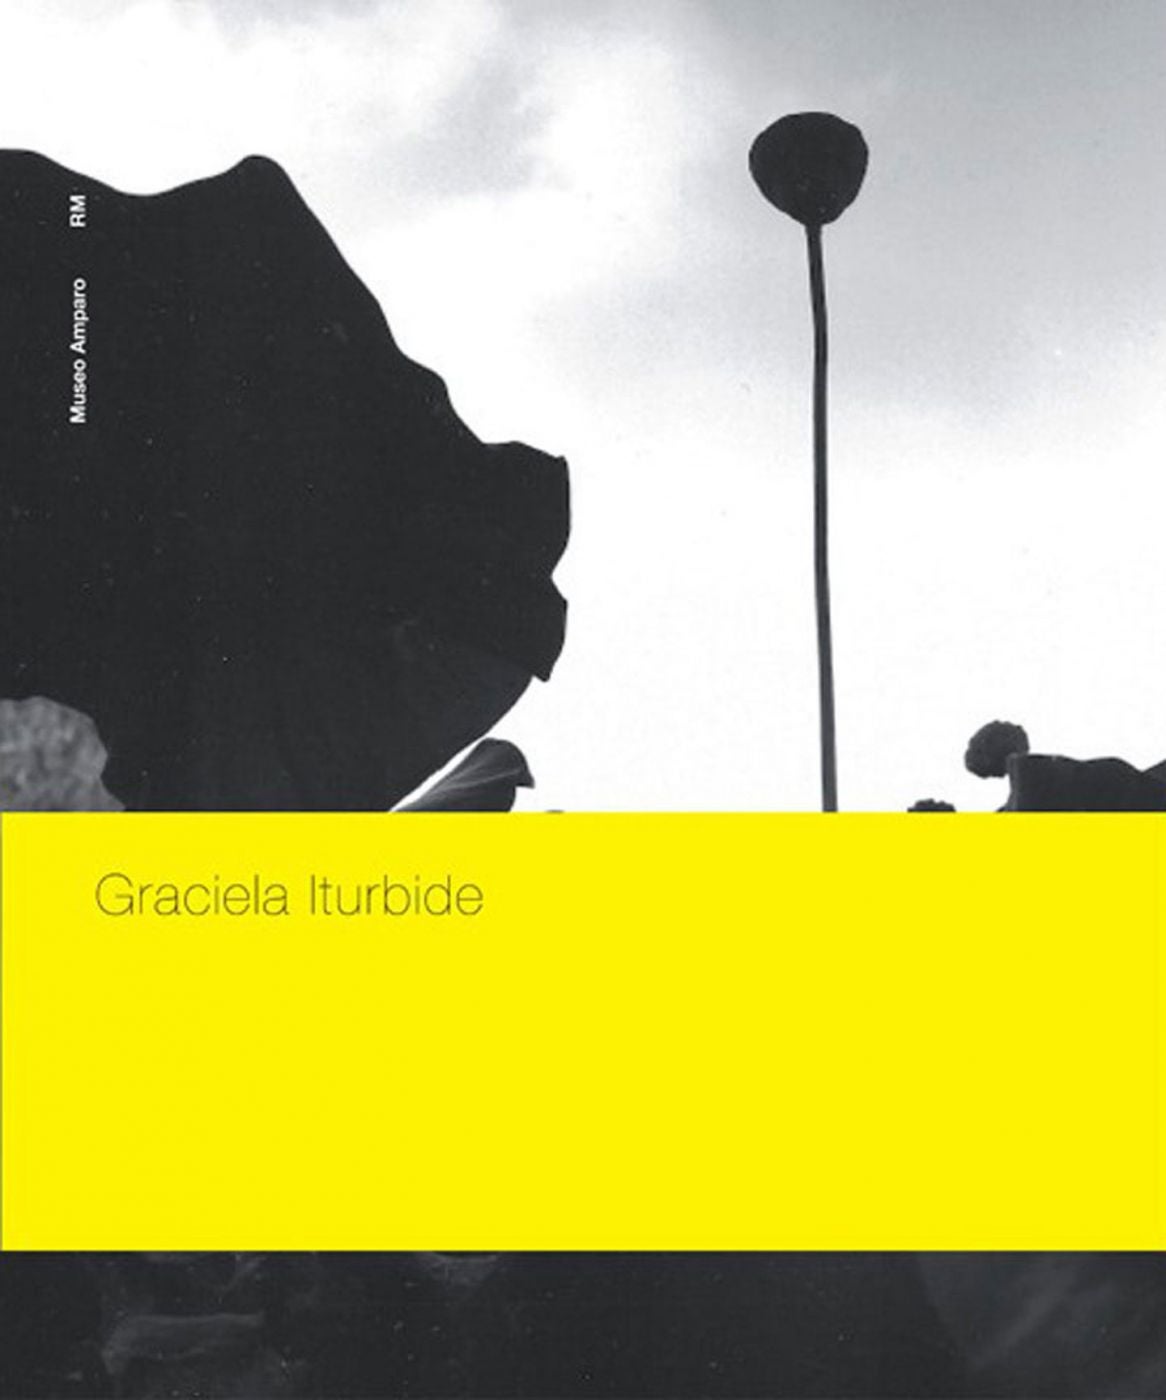 Graciela Iturbide (Museo Amparo), Special Limited Edition (with Gelatin Silver Print "Lugo, Italia, 2008")